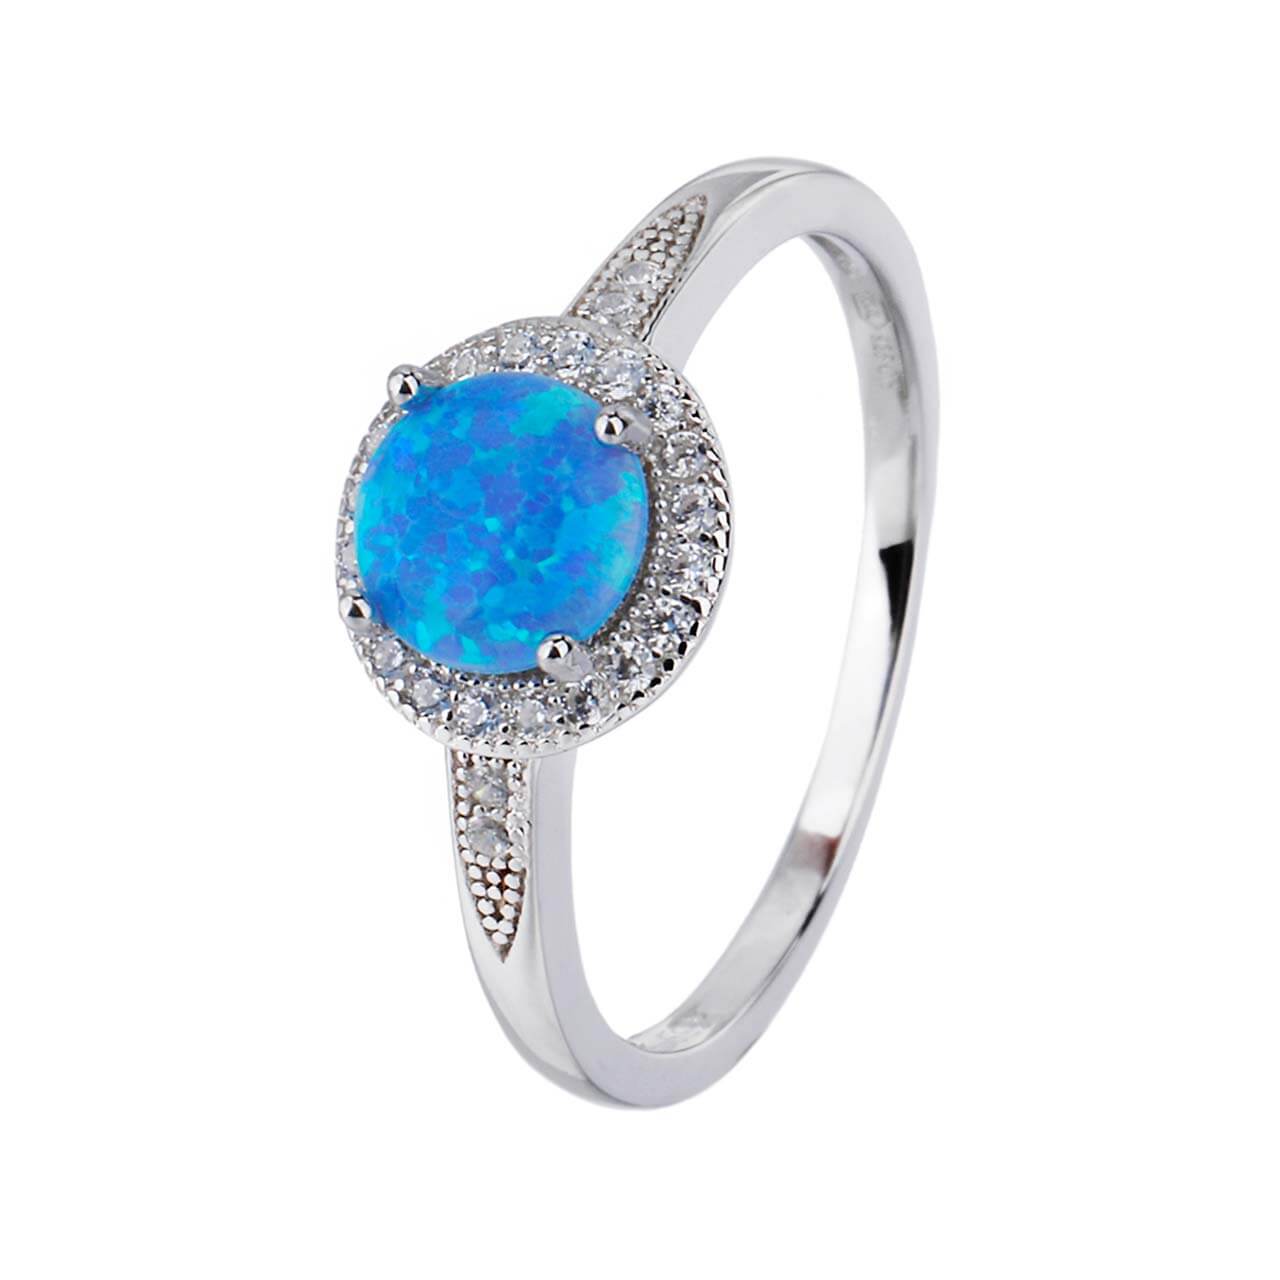 Stříbrný prsten SOLITÉR modrý OPÁL Velikost prstenu: 63 Ag 925/1000